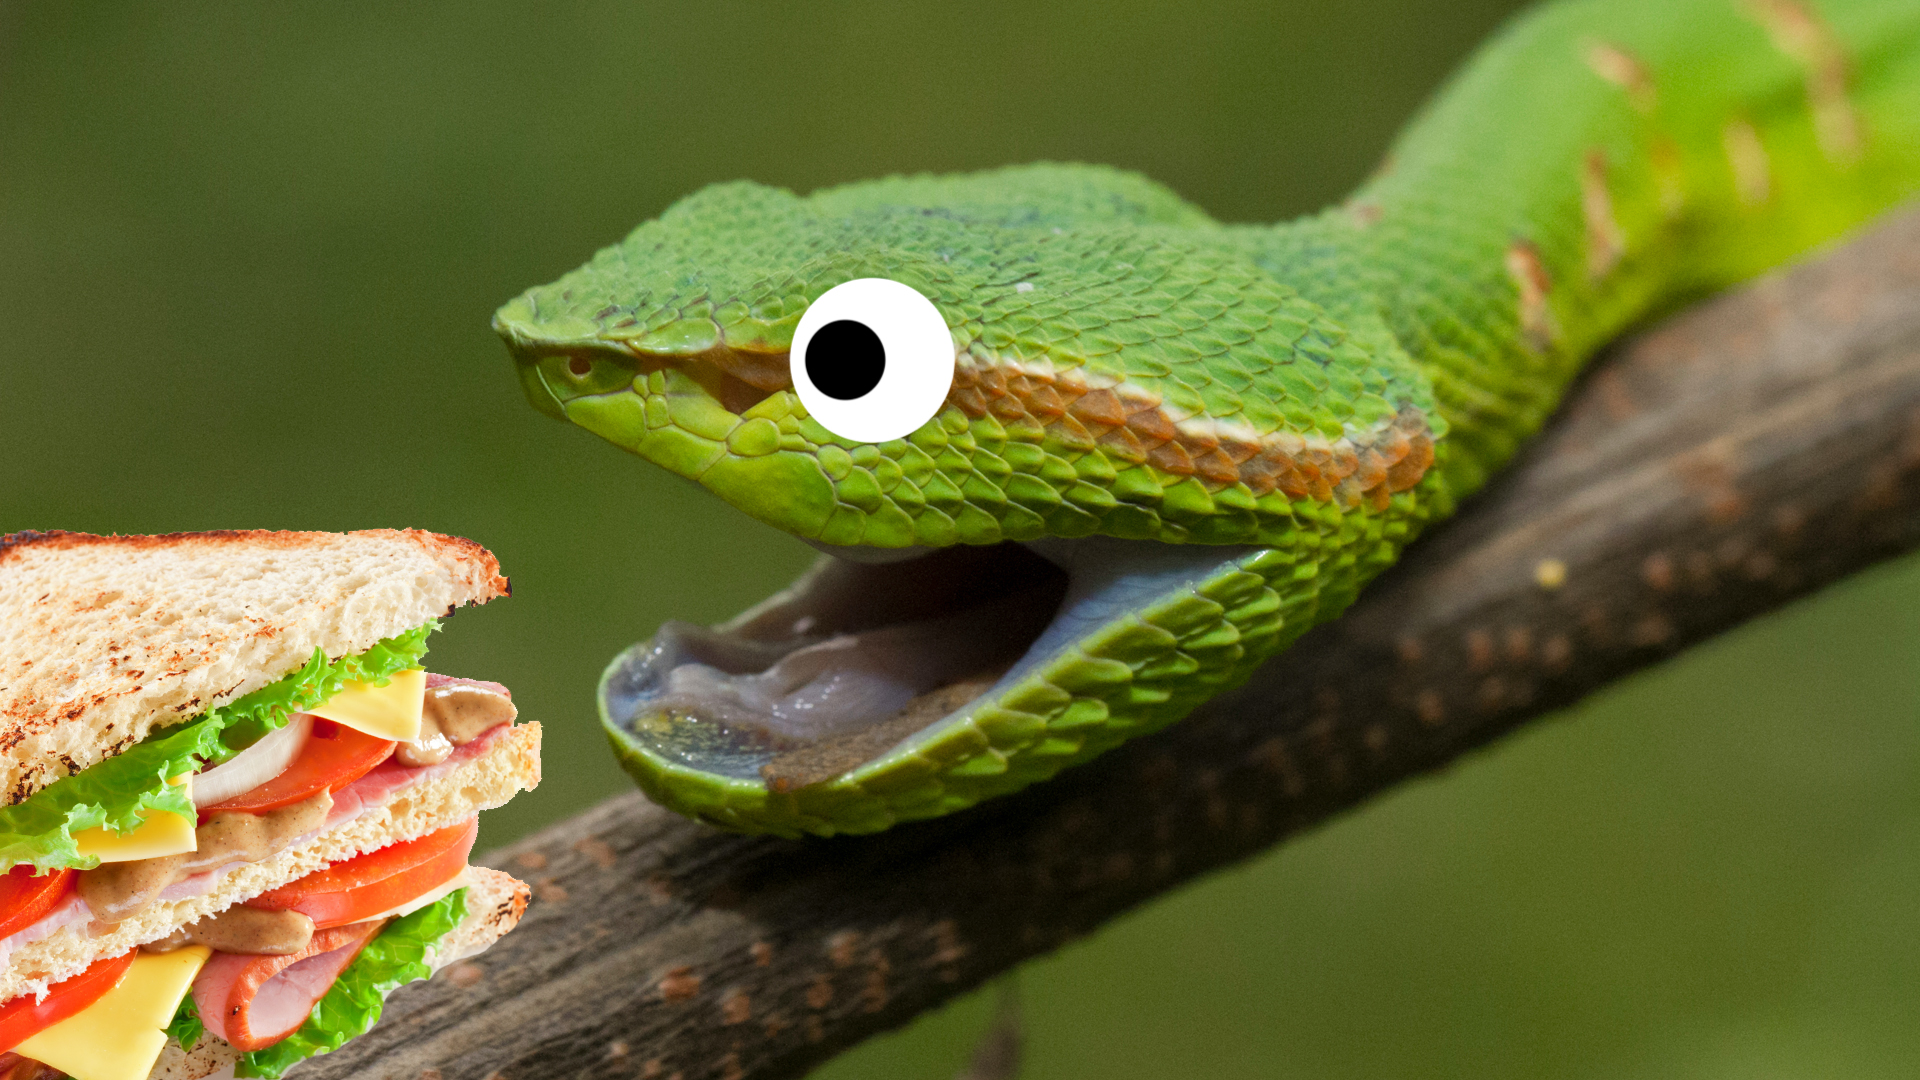 A pit viper eating sandwich